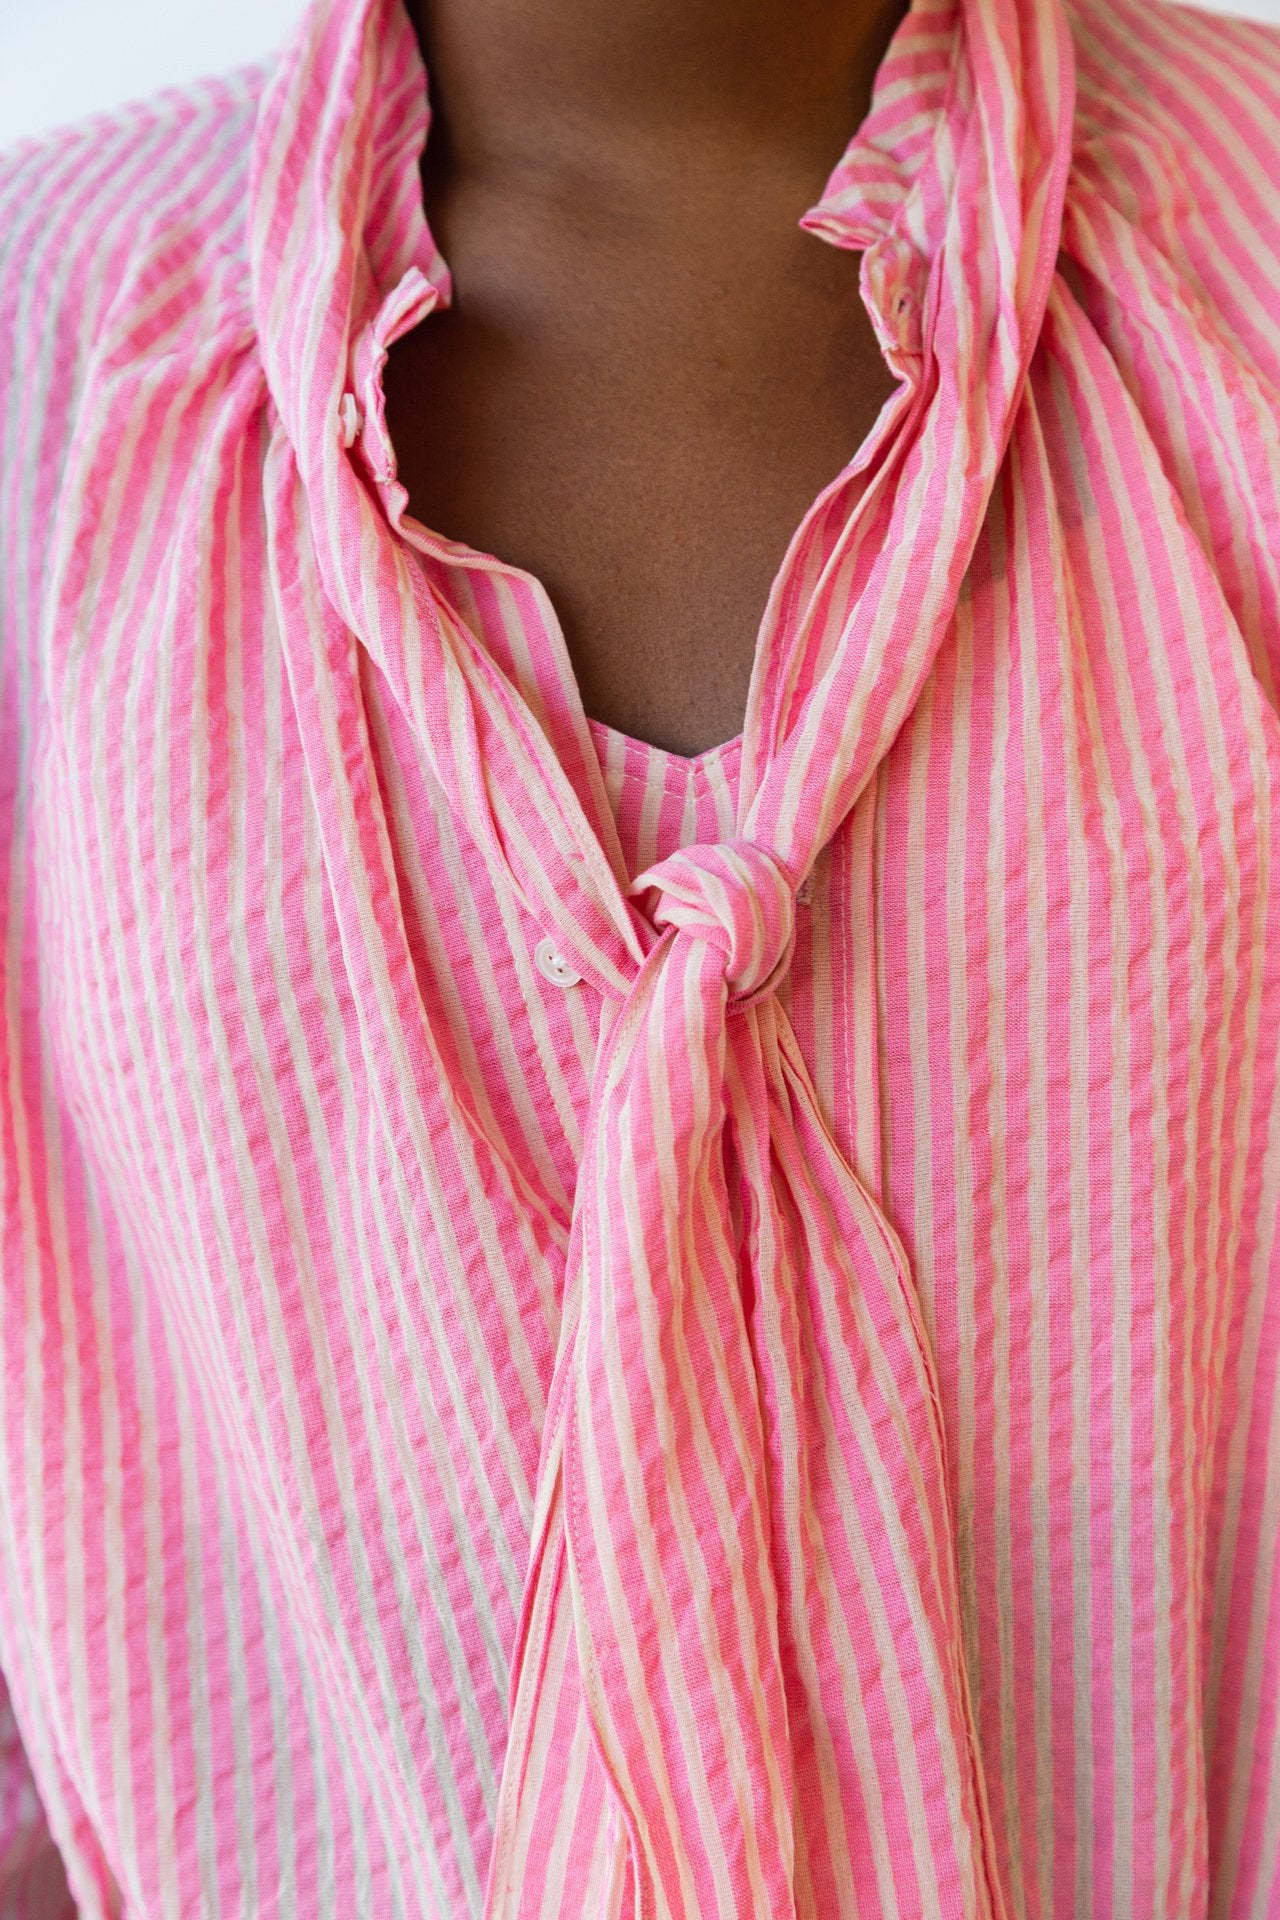 Daisy Top - Pink Gauze Stripe